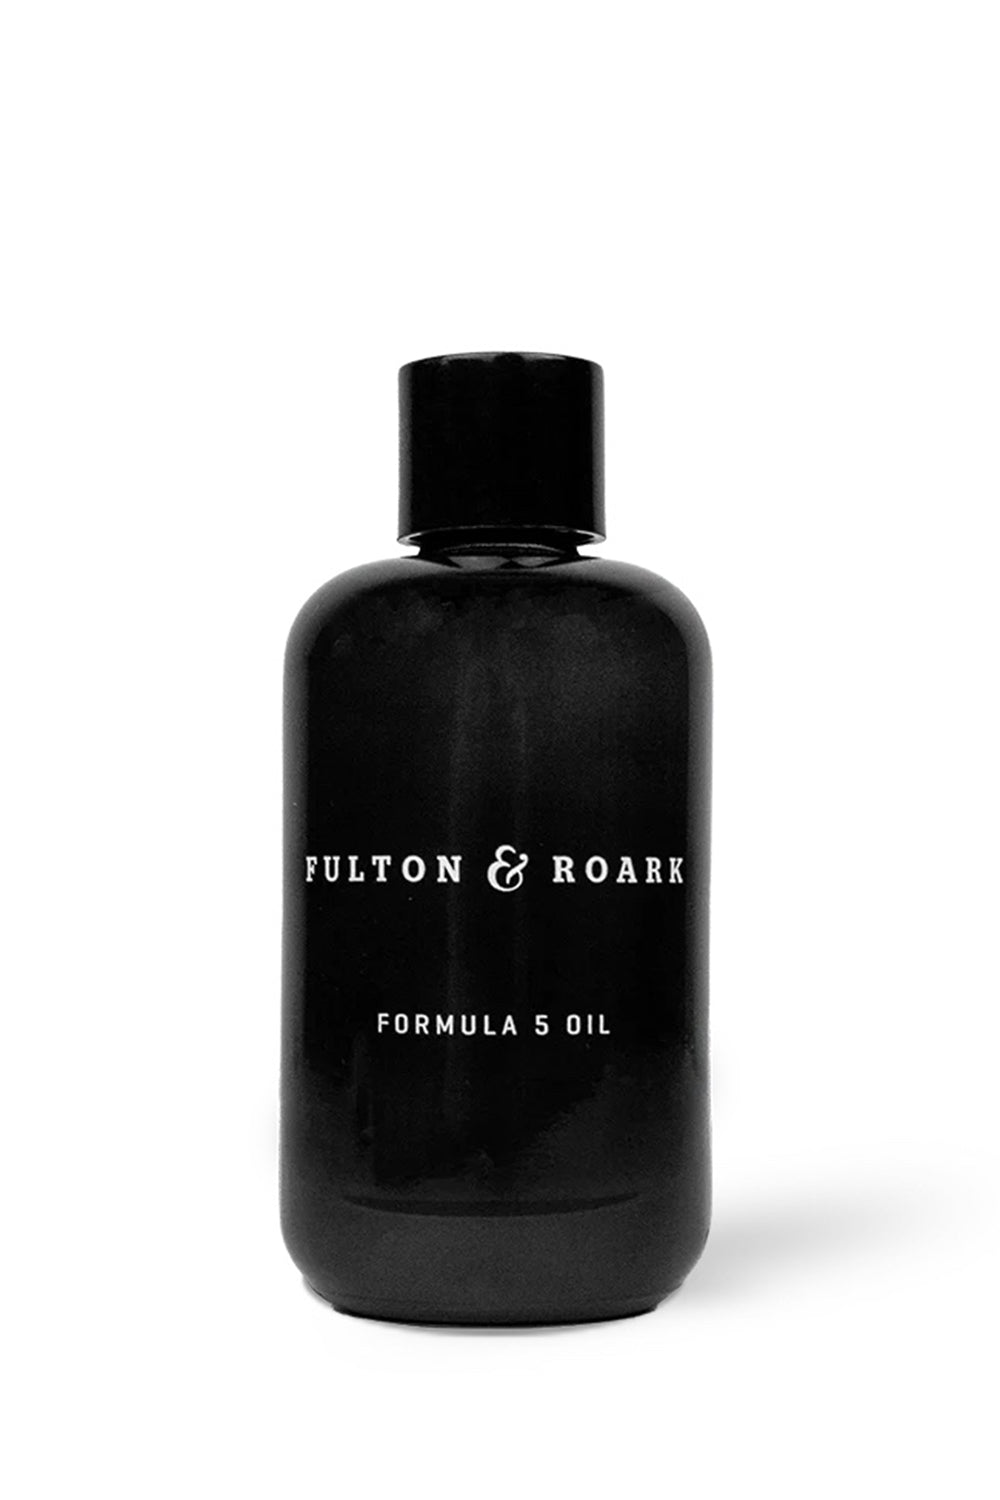 Fulton & Roark - Matia Formula 5 Oil